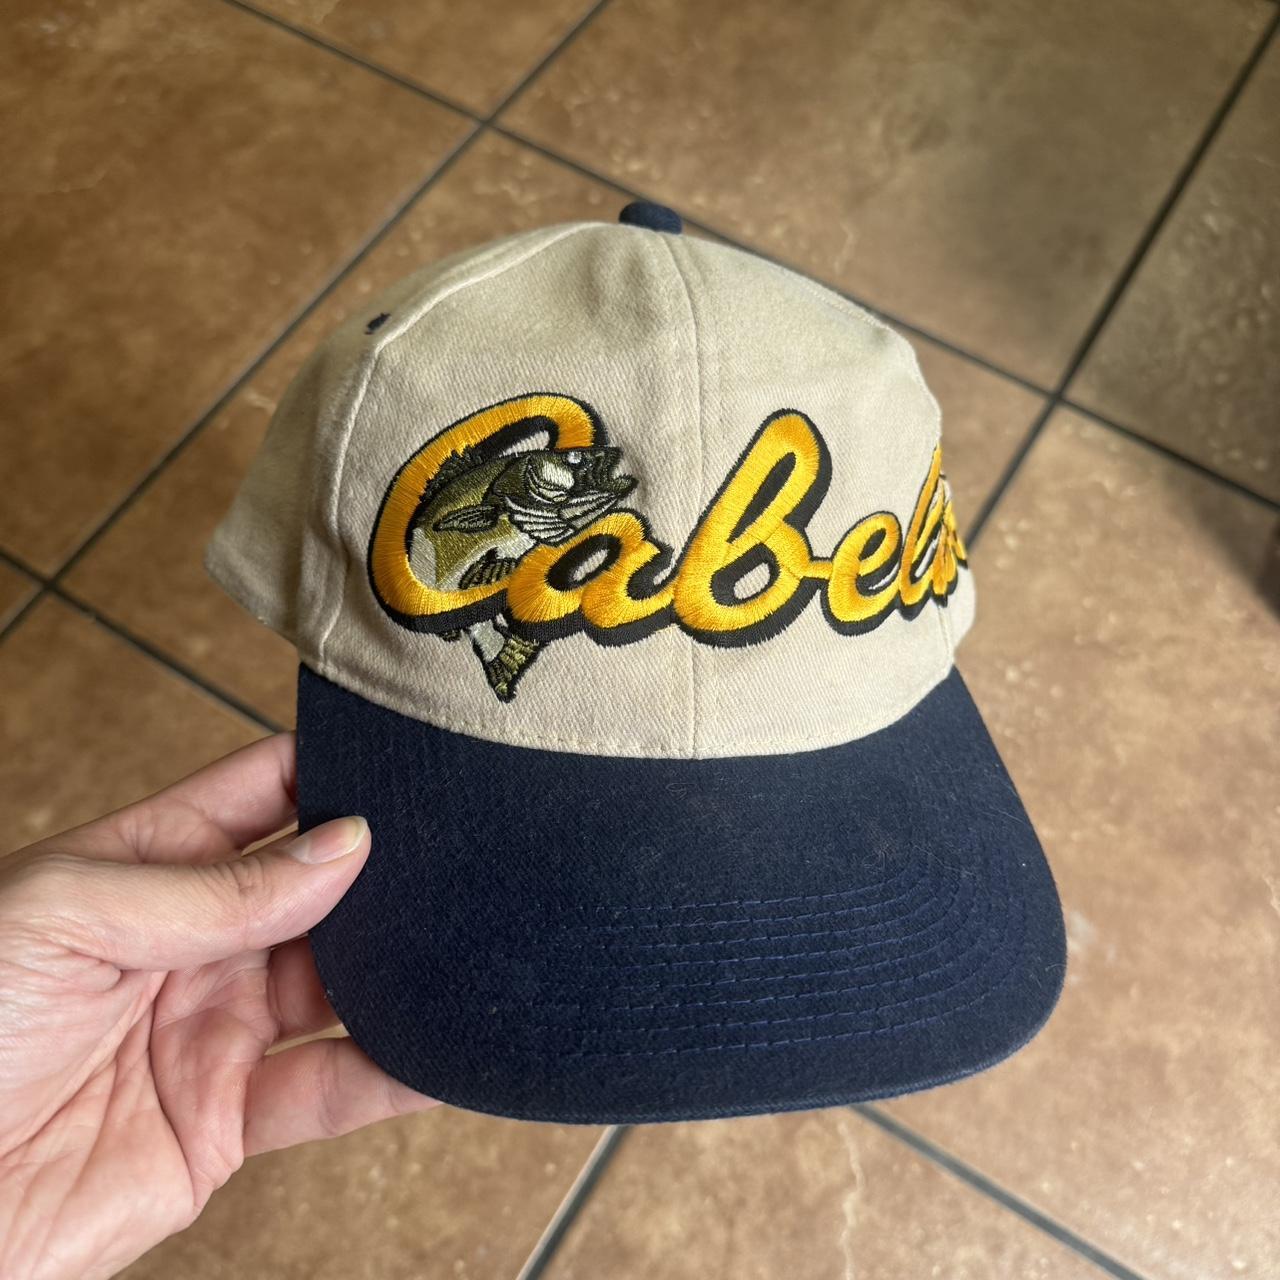 Cabela's - Trucker - Baseball Hat / Cap - Strap Back 